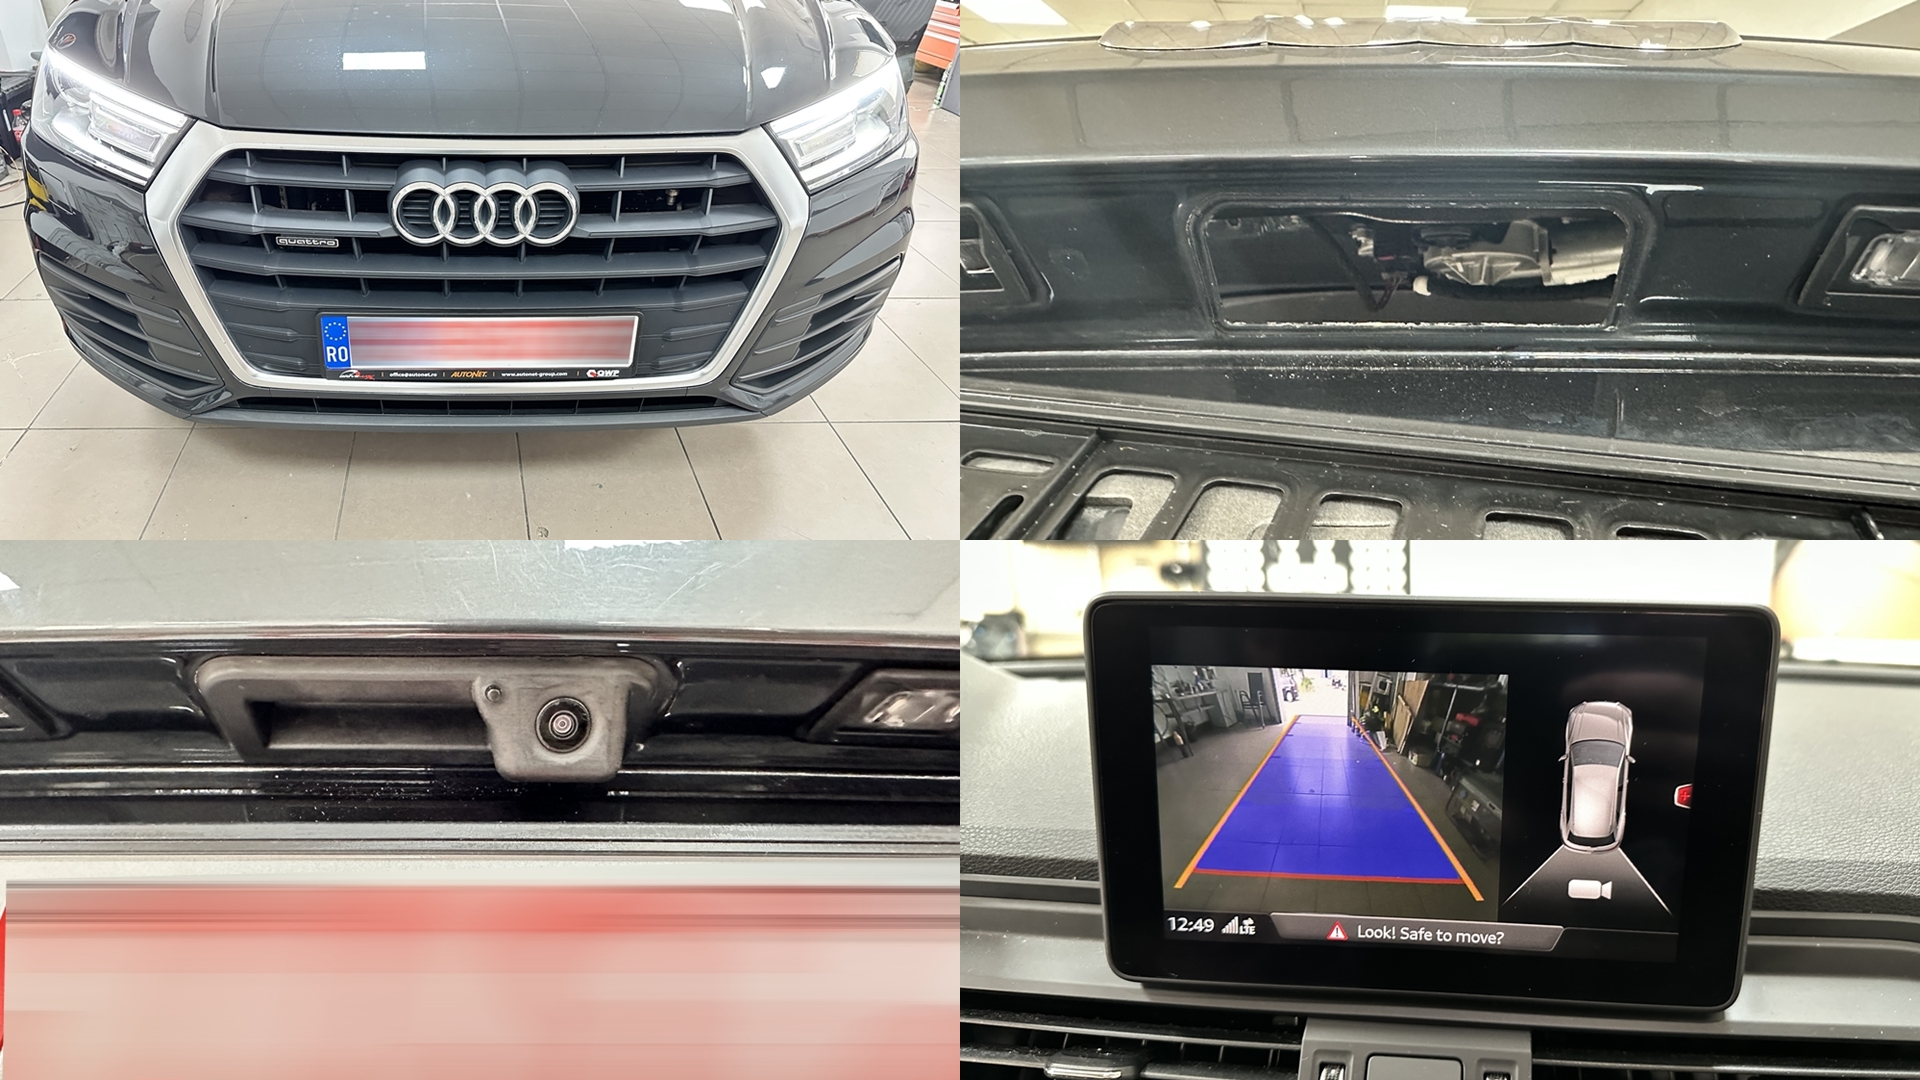 Poza - Instalare Camera Marsarier Audi Q5 FY 2018 Camera Video Spate Originala